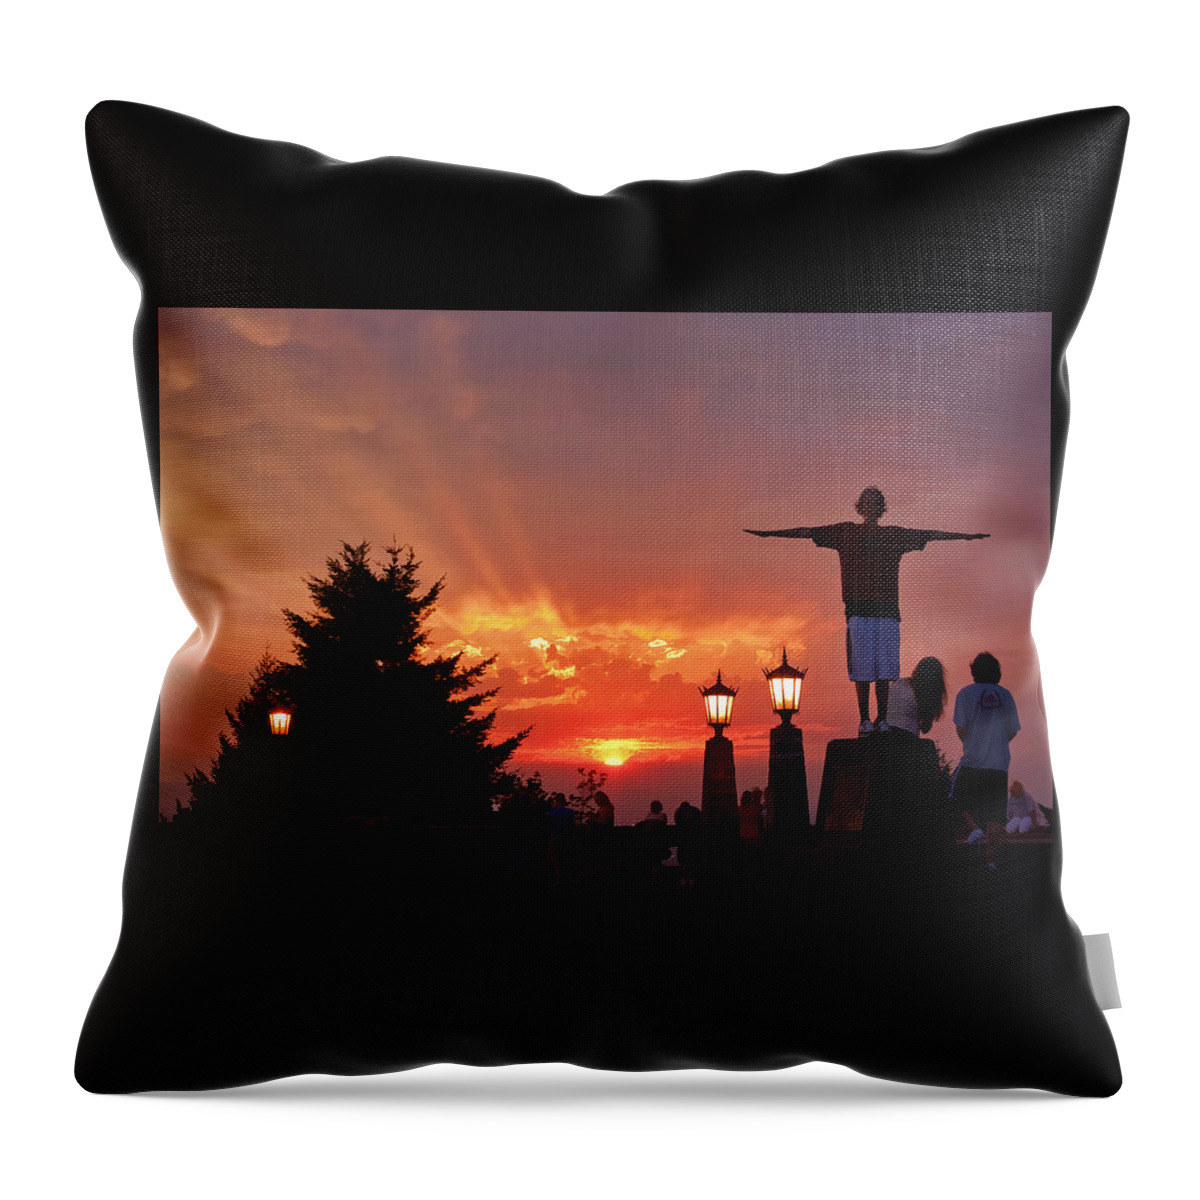 Enjoying A Sunset Throw Pillow featuring the photograph Enjoying A Sunset by Wes and Dotty Weber